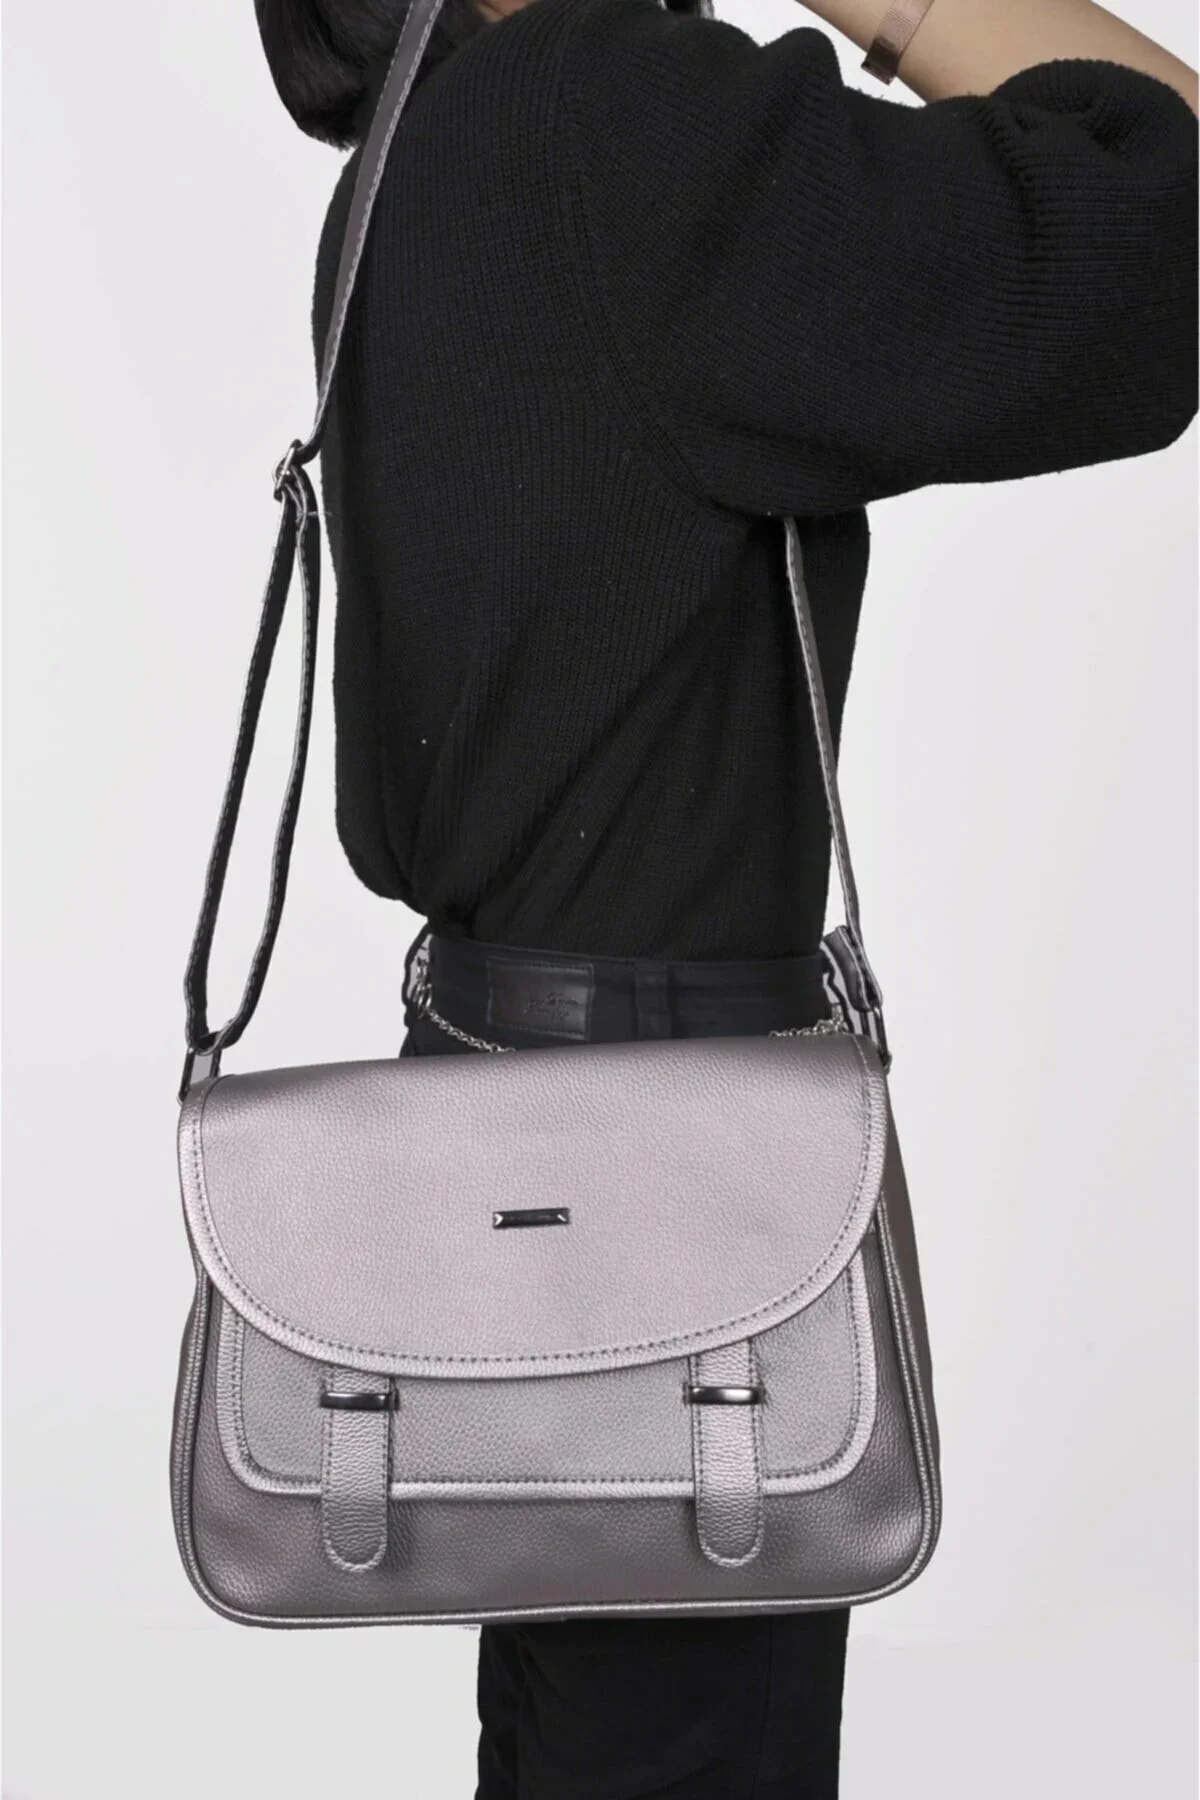 Women Silver Gray Color Flap Faux Leather Shoulder Bag 2021 Fashion Stylish Remarkable Convenient Spring Summer Design